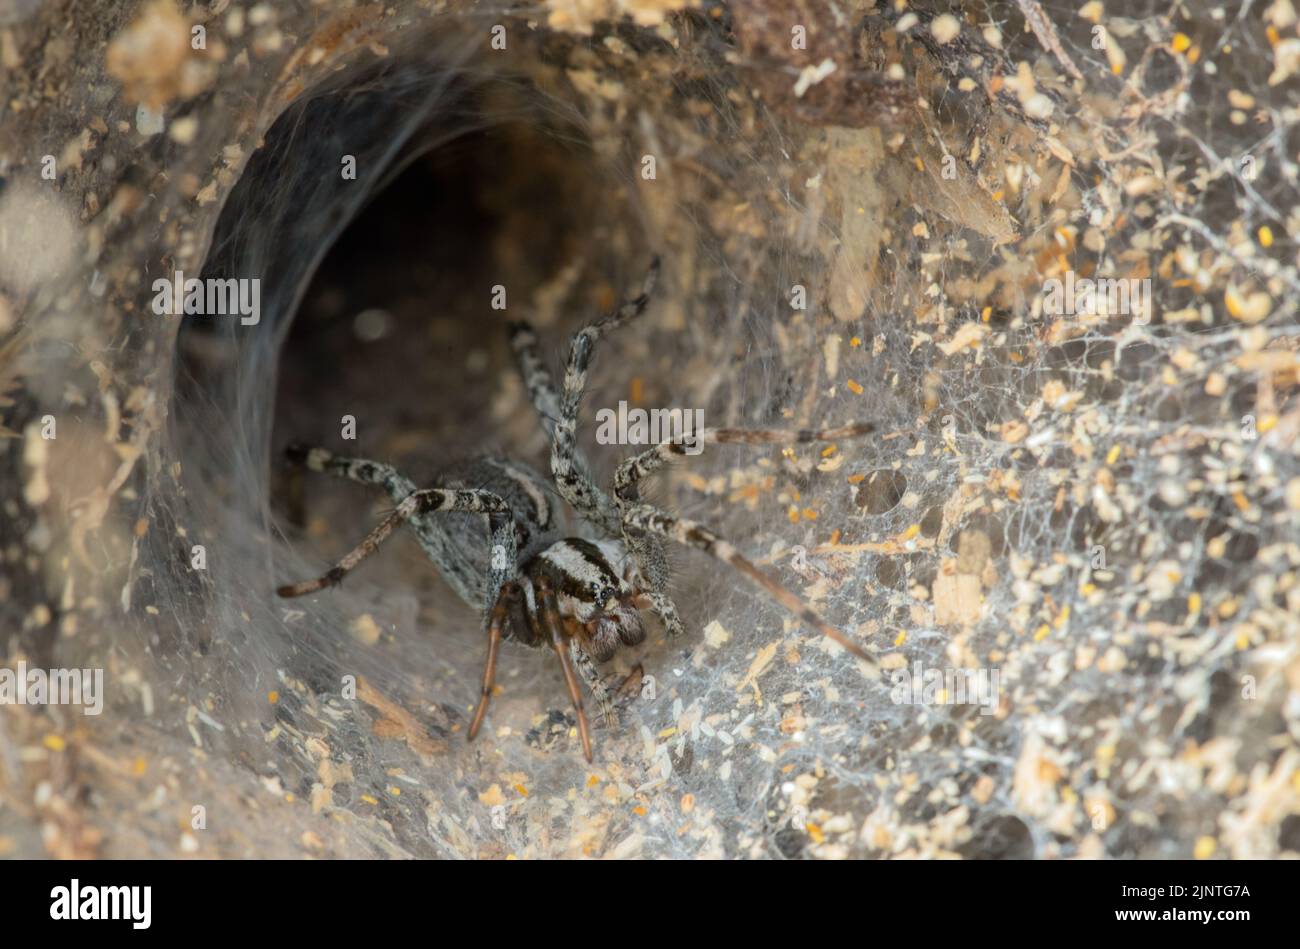 Agelenopsis spp. Funnel Web Spider on web Stock Photo